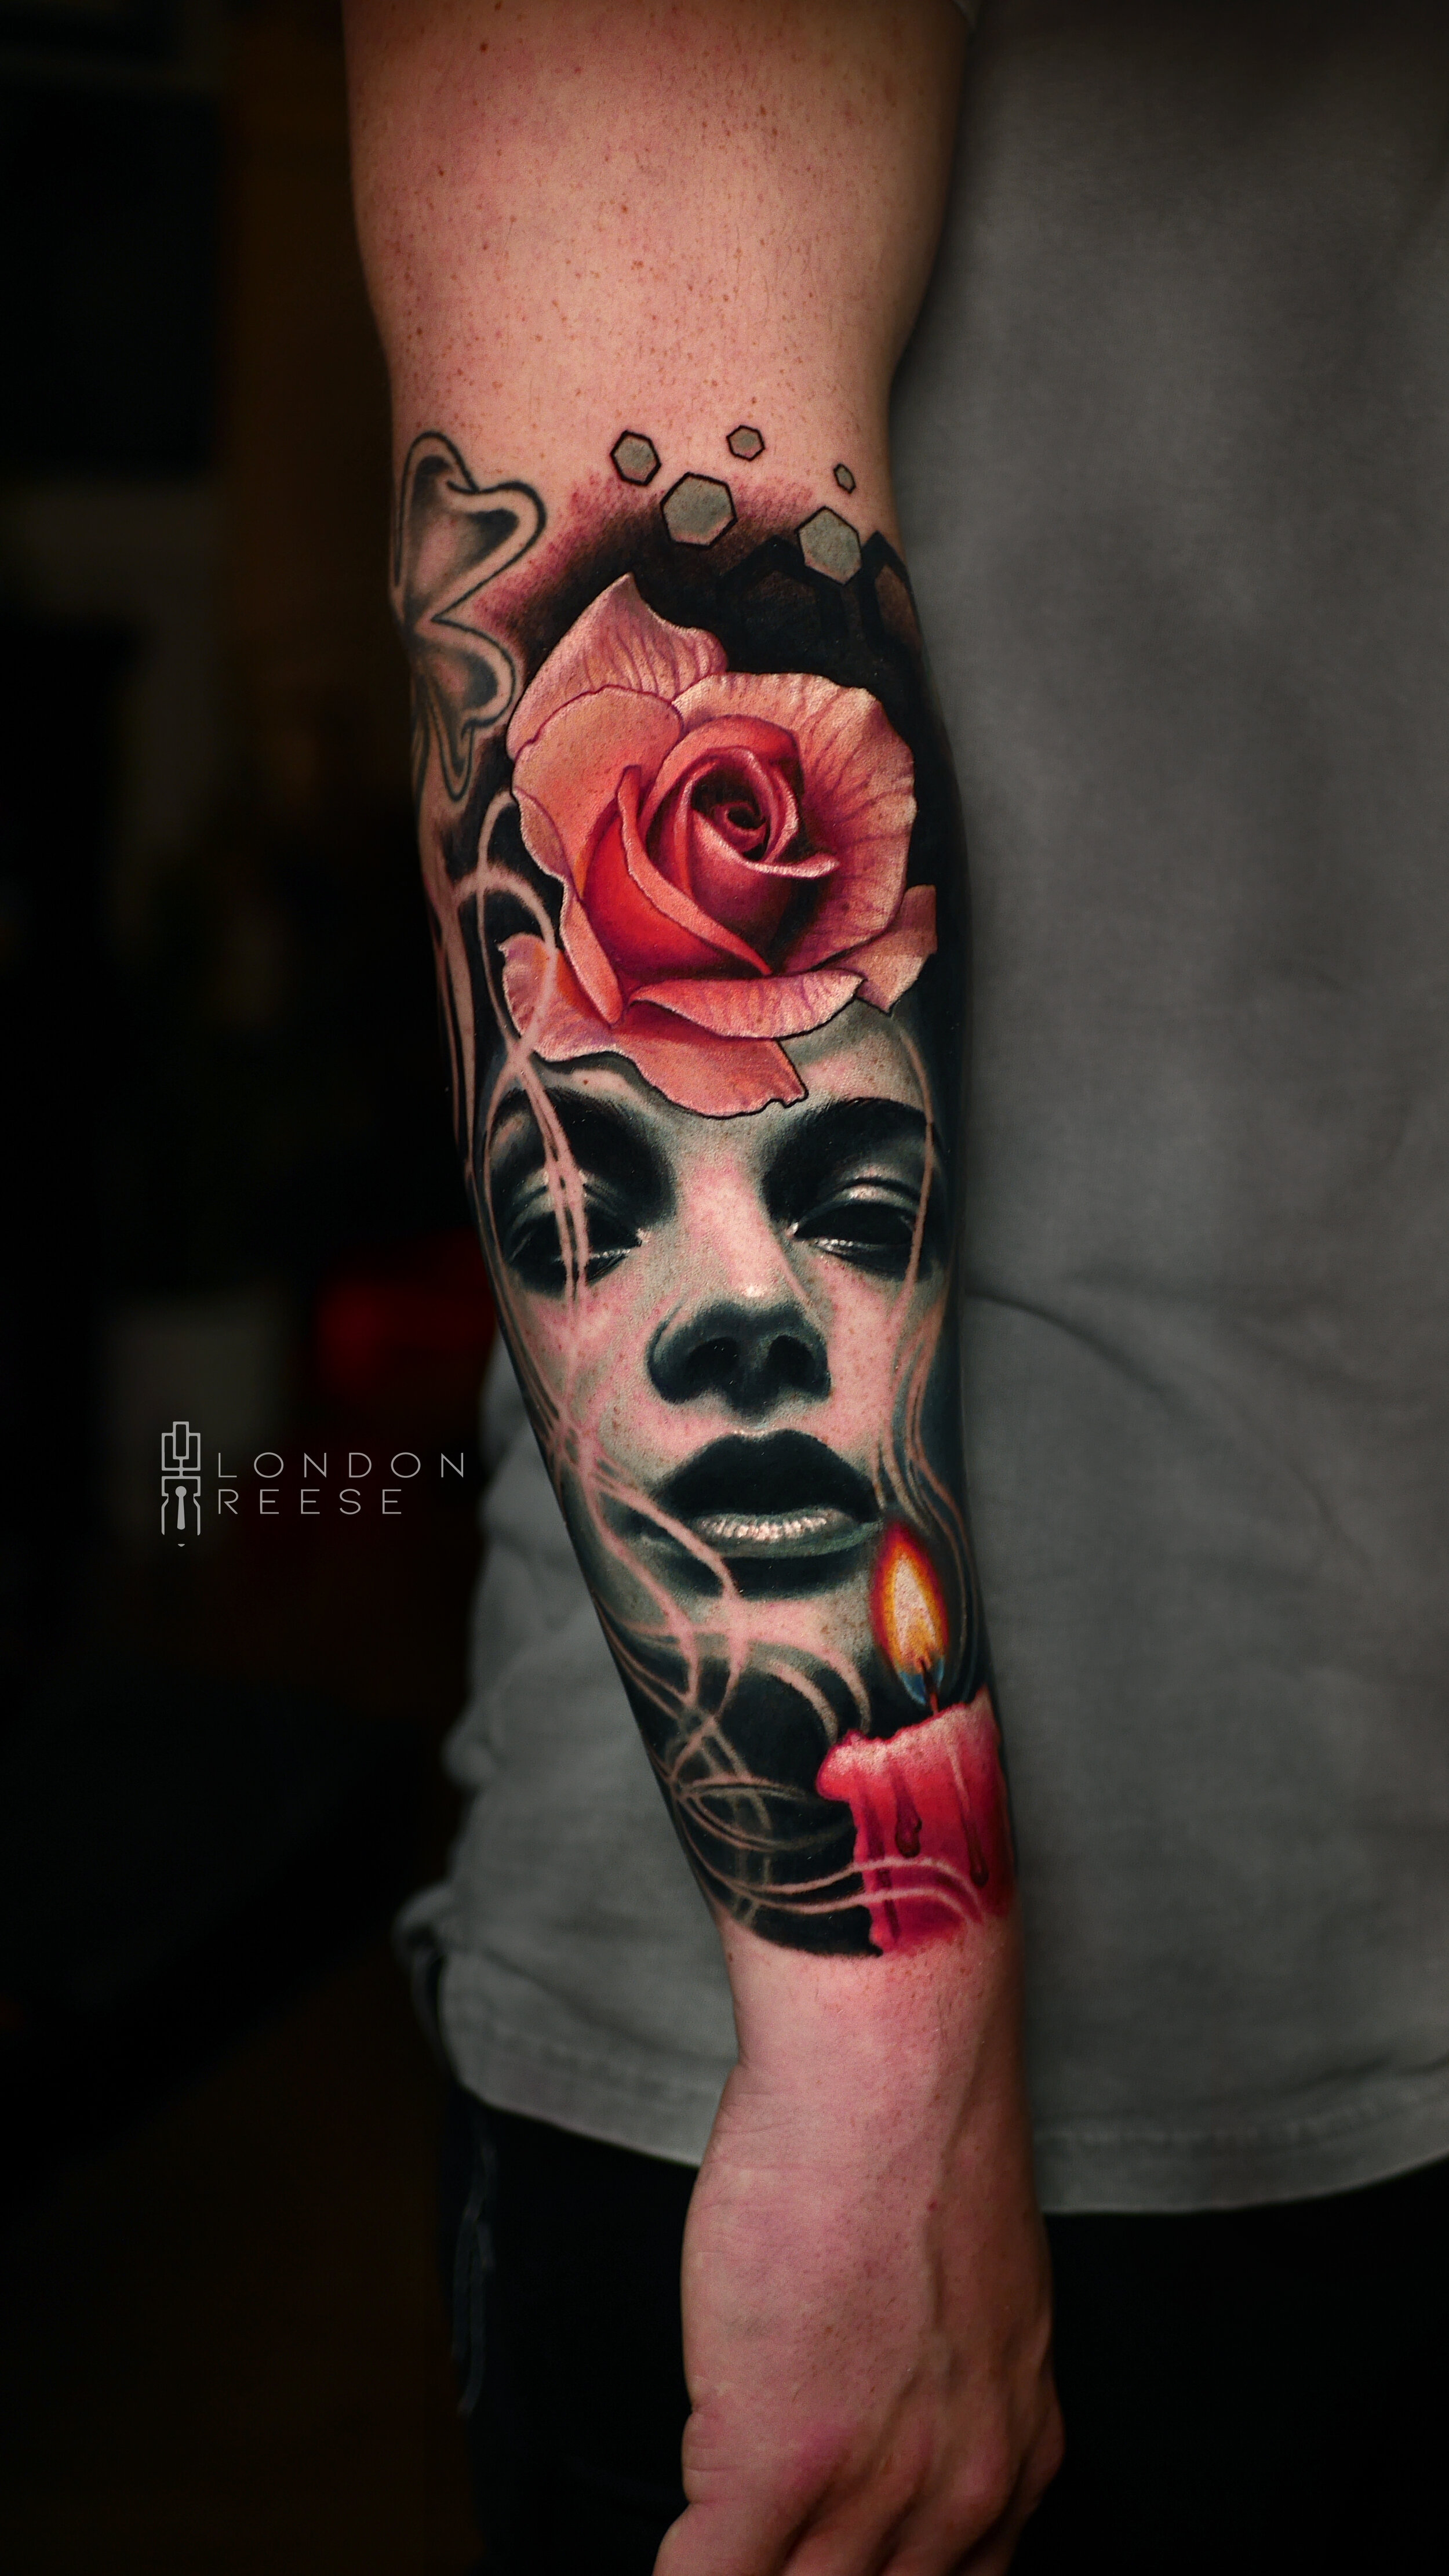 beholder girl rose candle tattoo.jpg